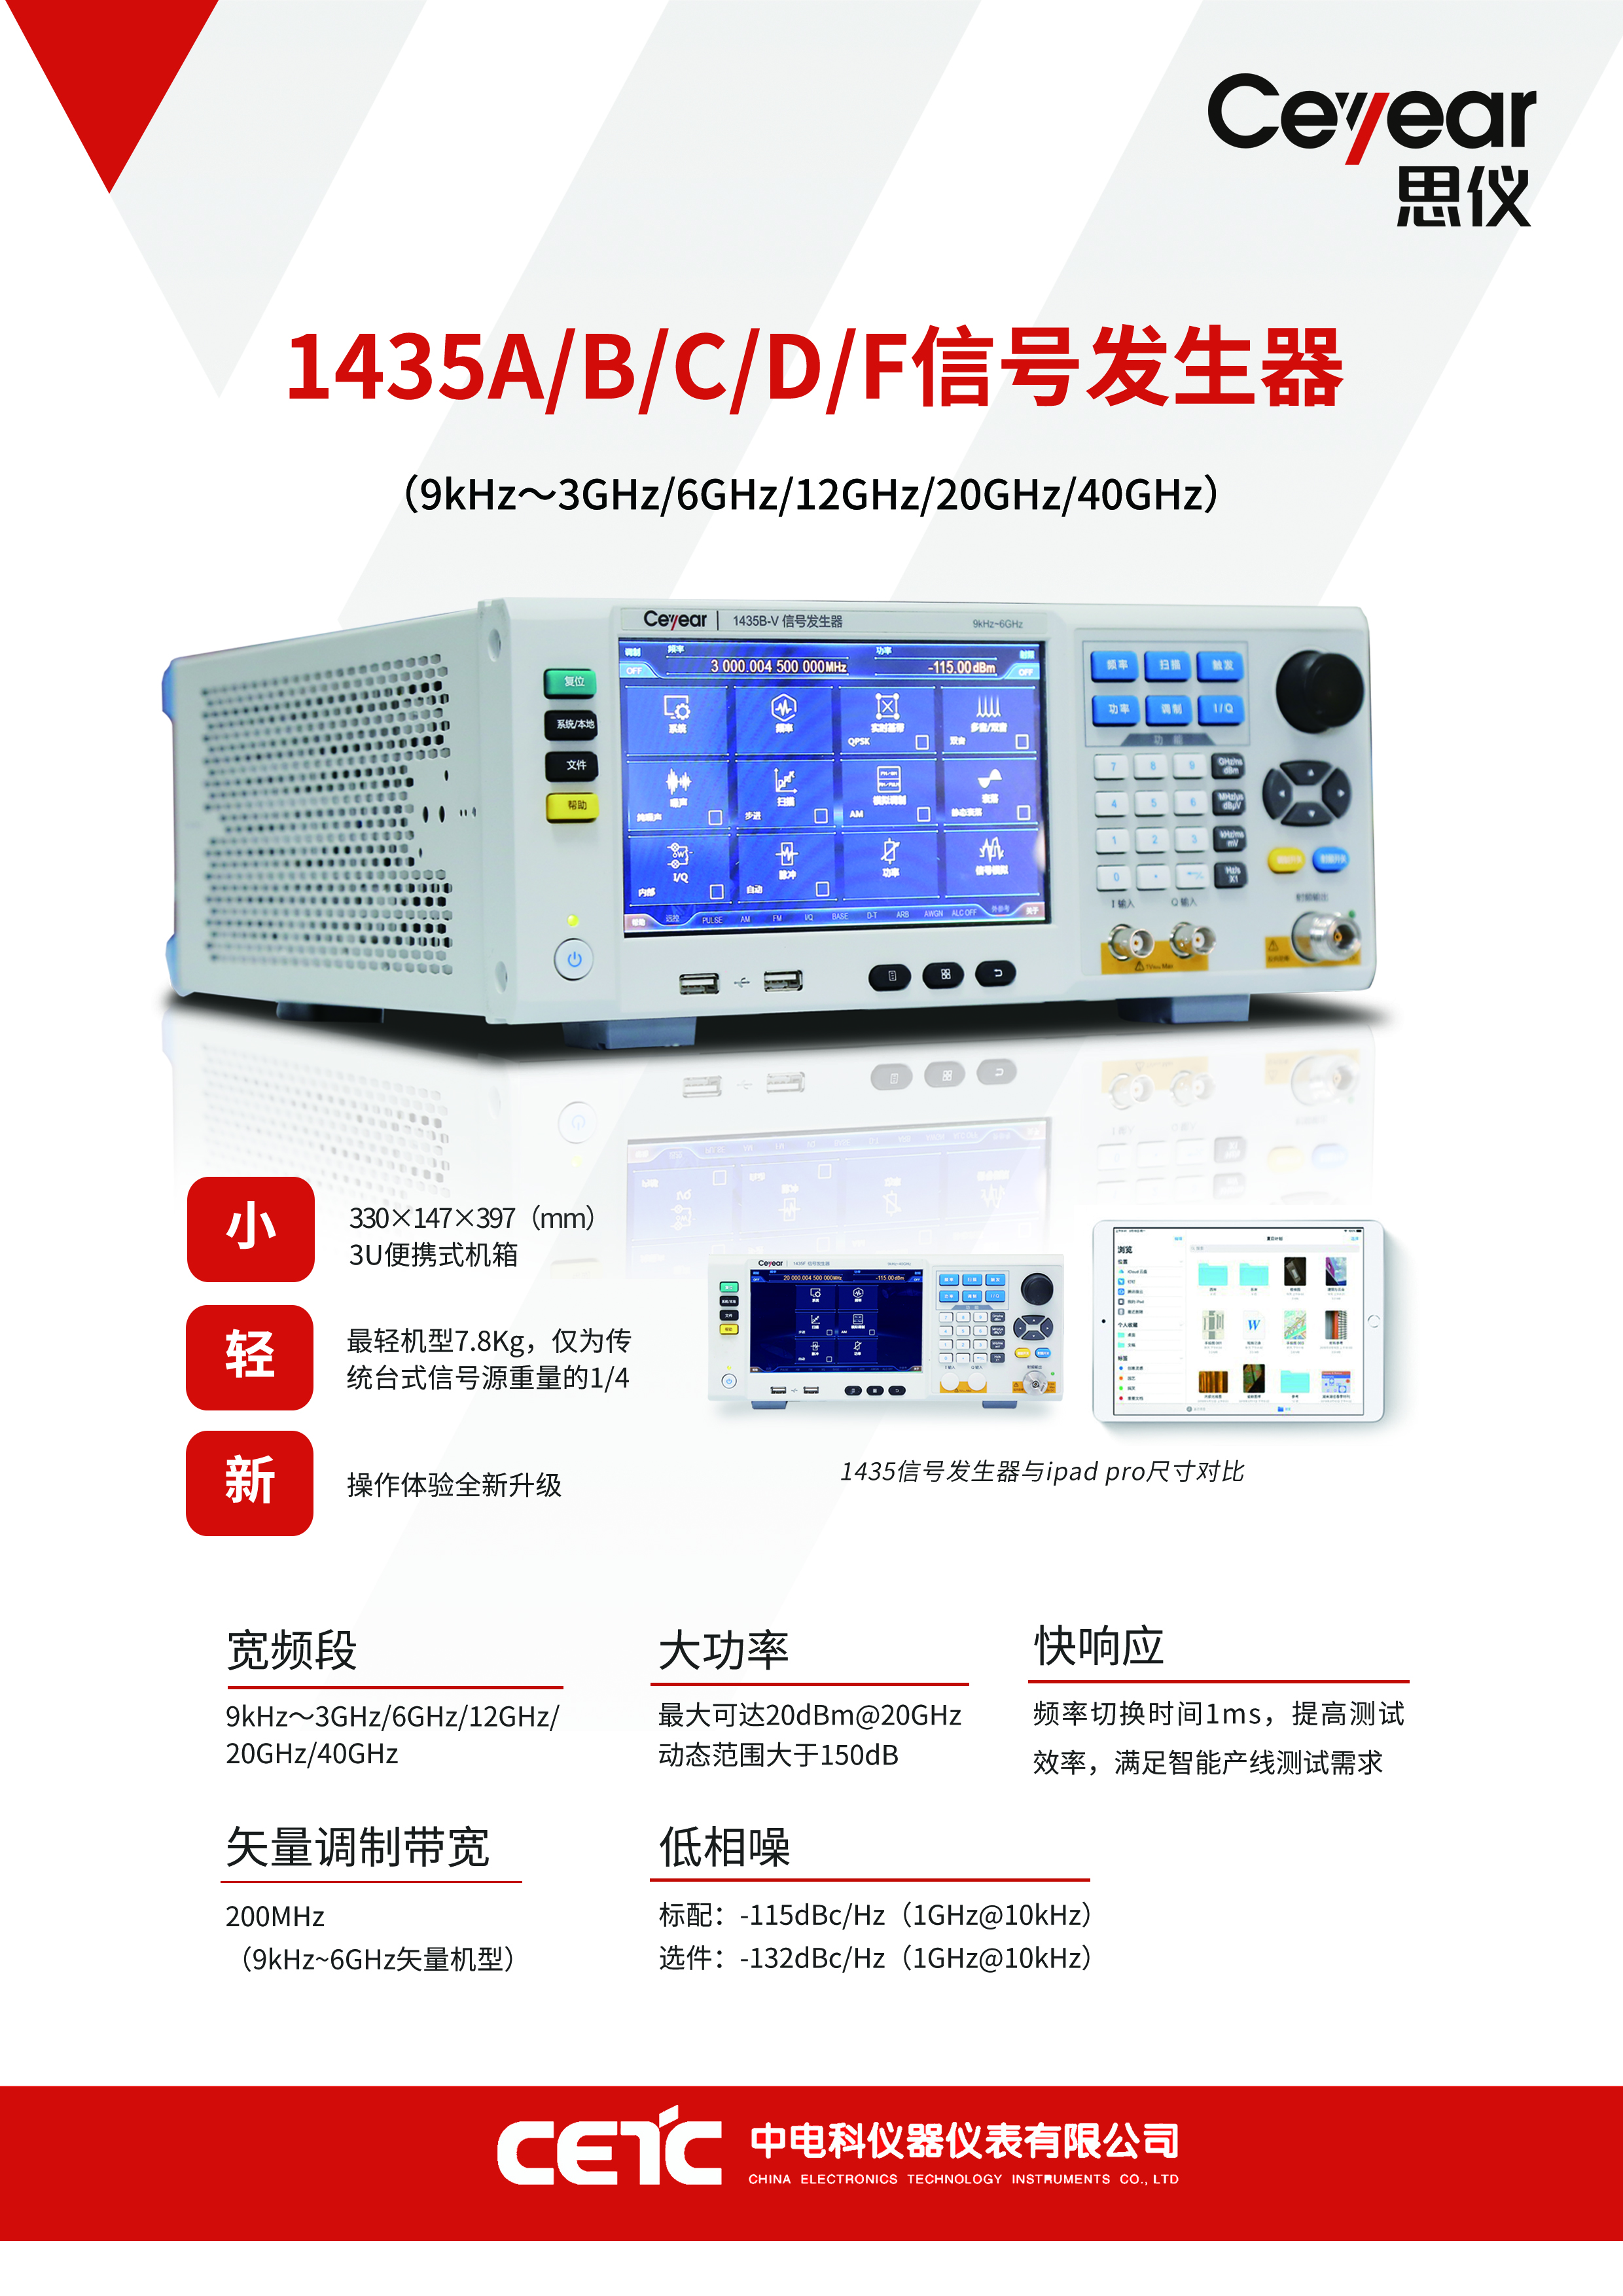 1435C/D/E/F/H/L信号发生器9KHz~400GHz